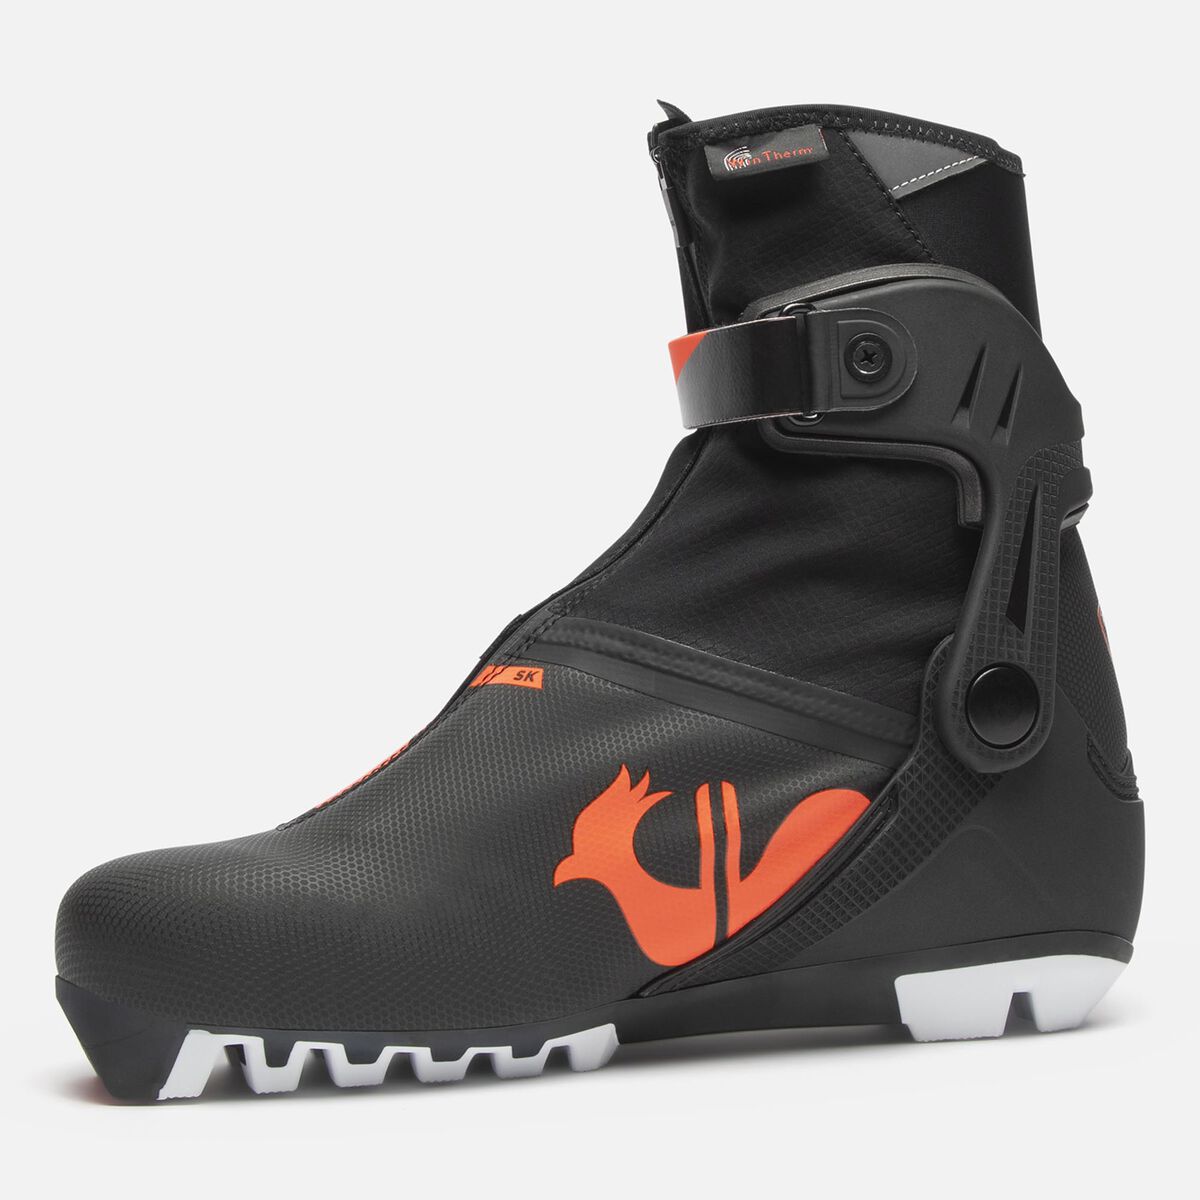 Unisex Race Skate Nordic Boots X-10